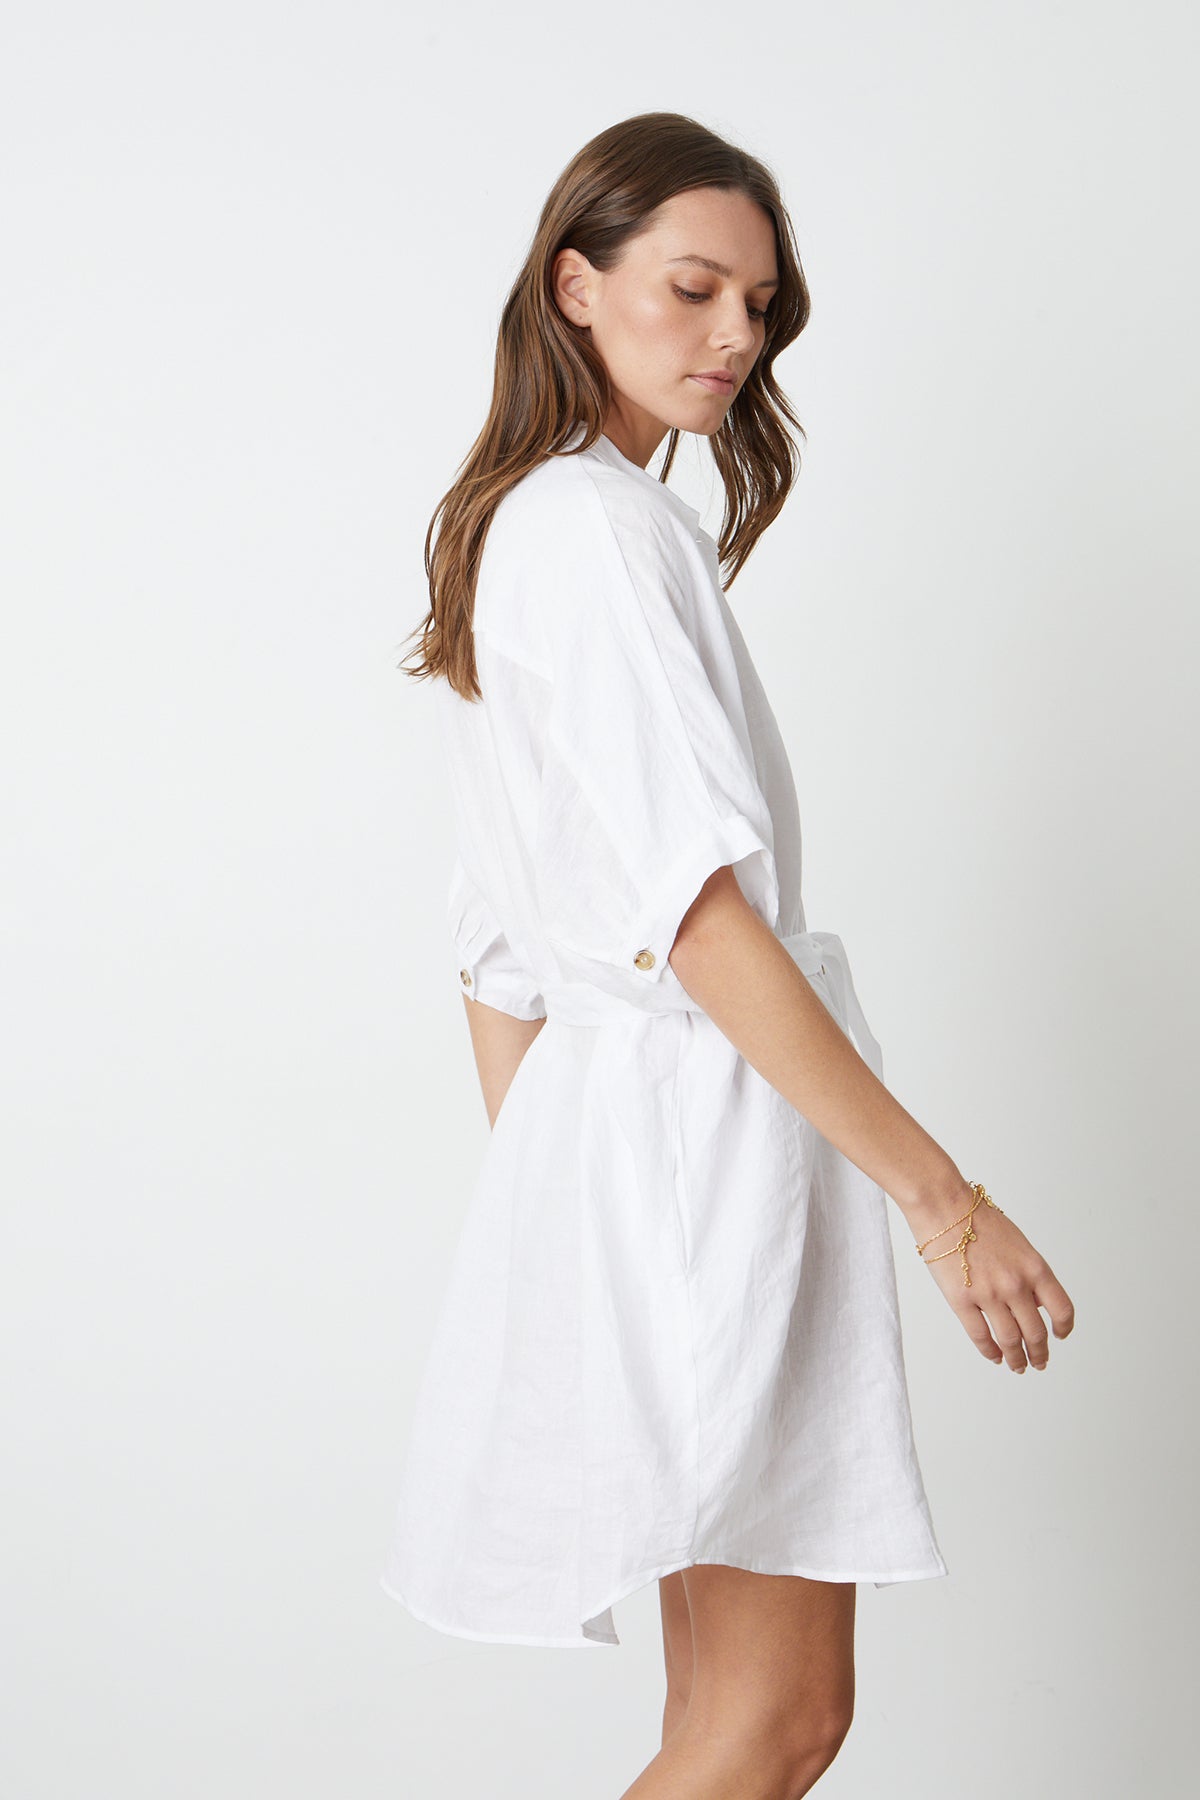   The model is wearing the STEVIE LINEN BUTTON-UP DRESS by Velvet by Graham & Spencer. 